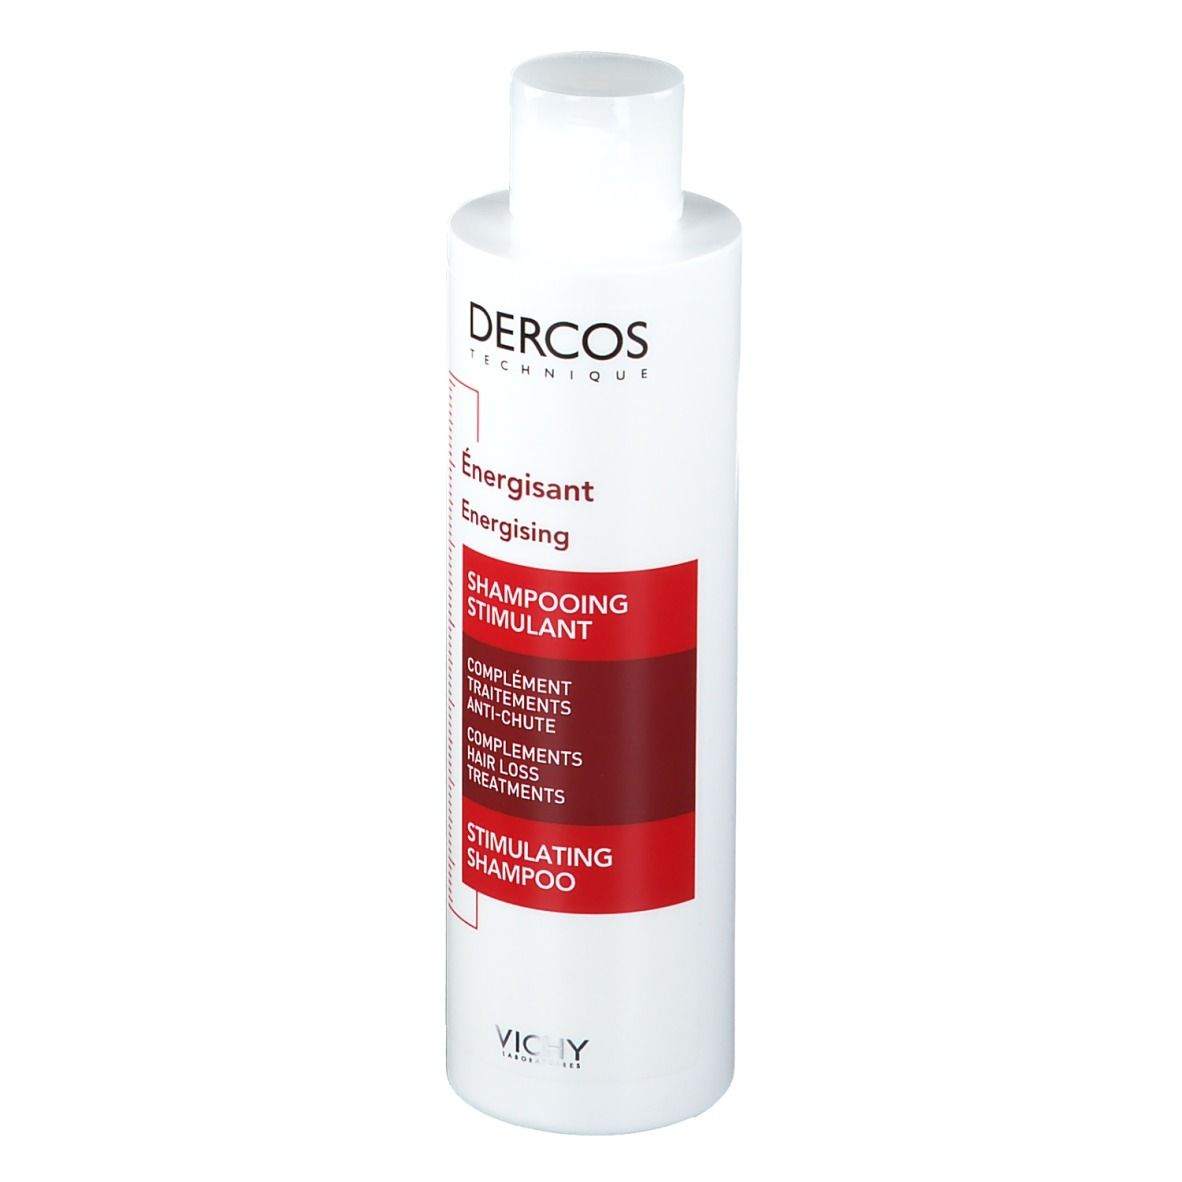 VICHY Dercos Vital Anti-Haarverlust Shampoo